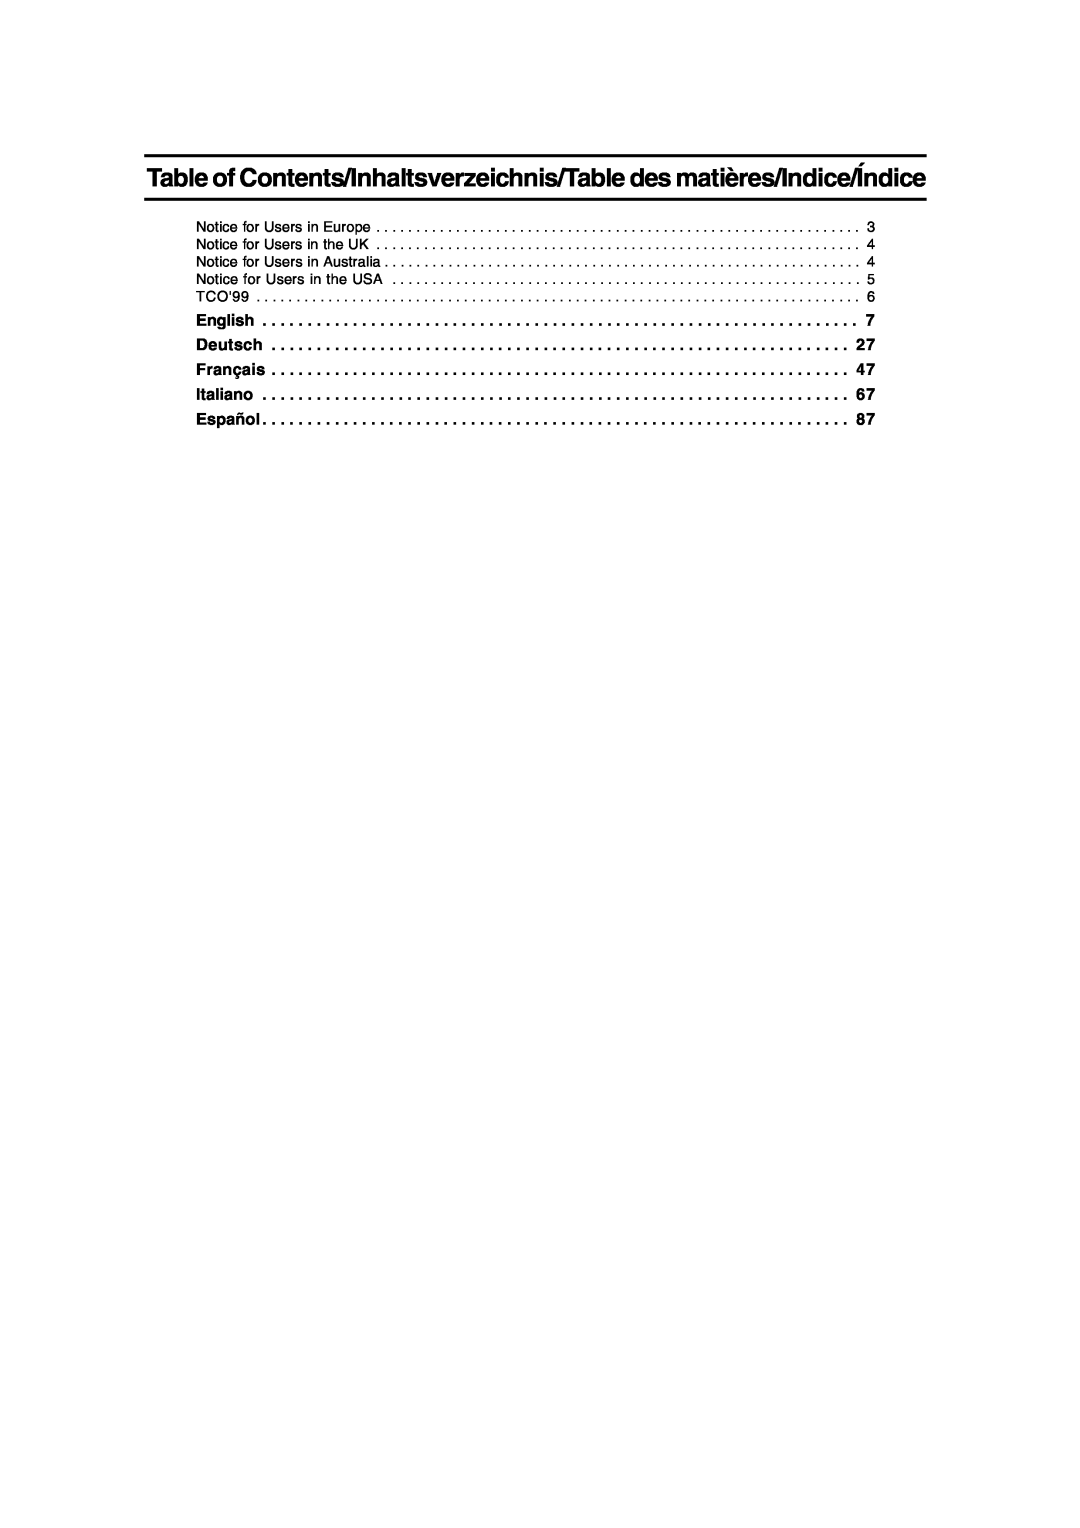 Sharp LL-T15A4 operation manual Table of Contents/Inhaltsverzeichnis/Table des matières/Indice/Índice 